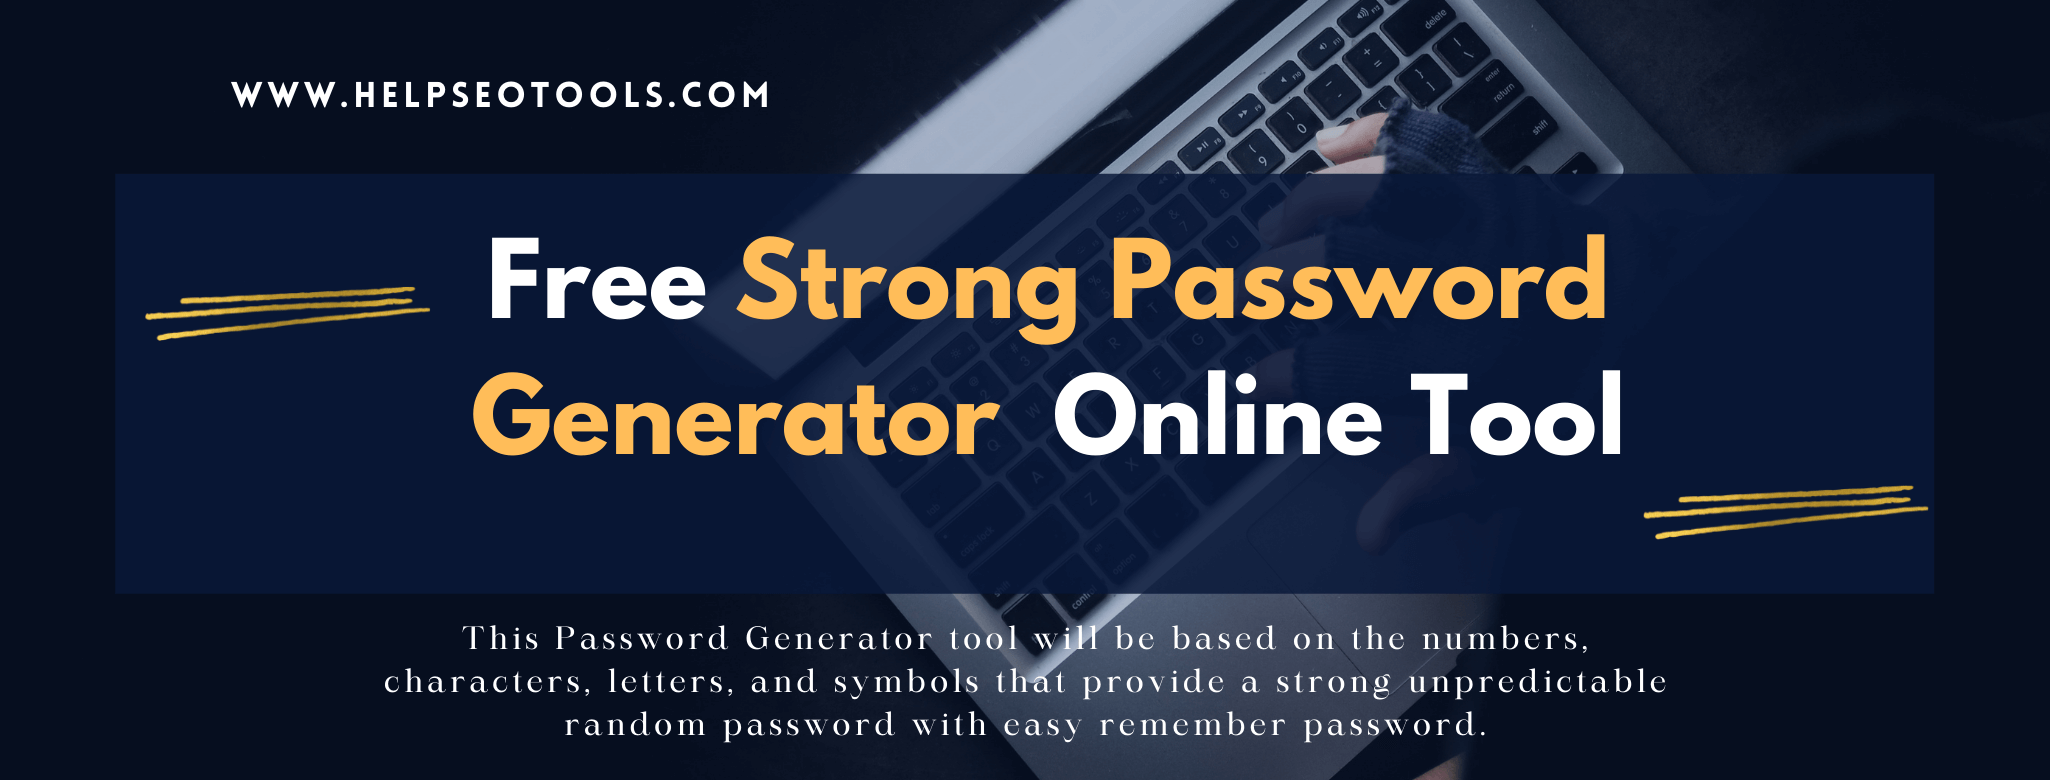 Free Strong Password Generator Free Online Tool